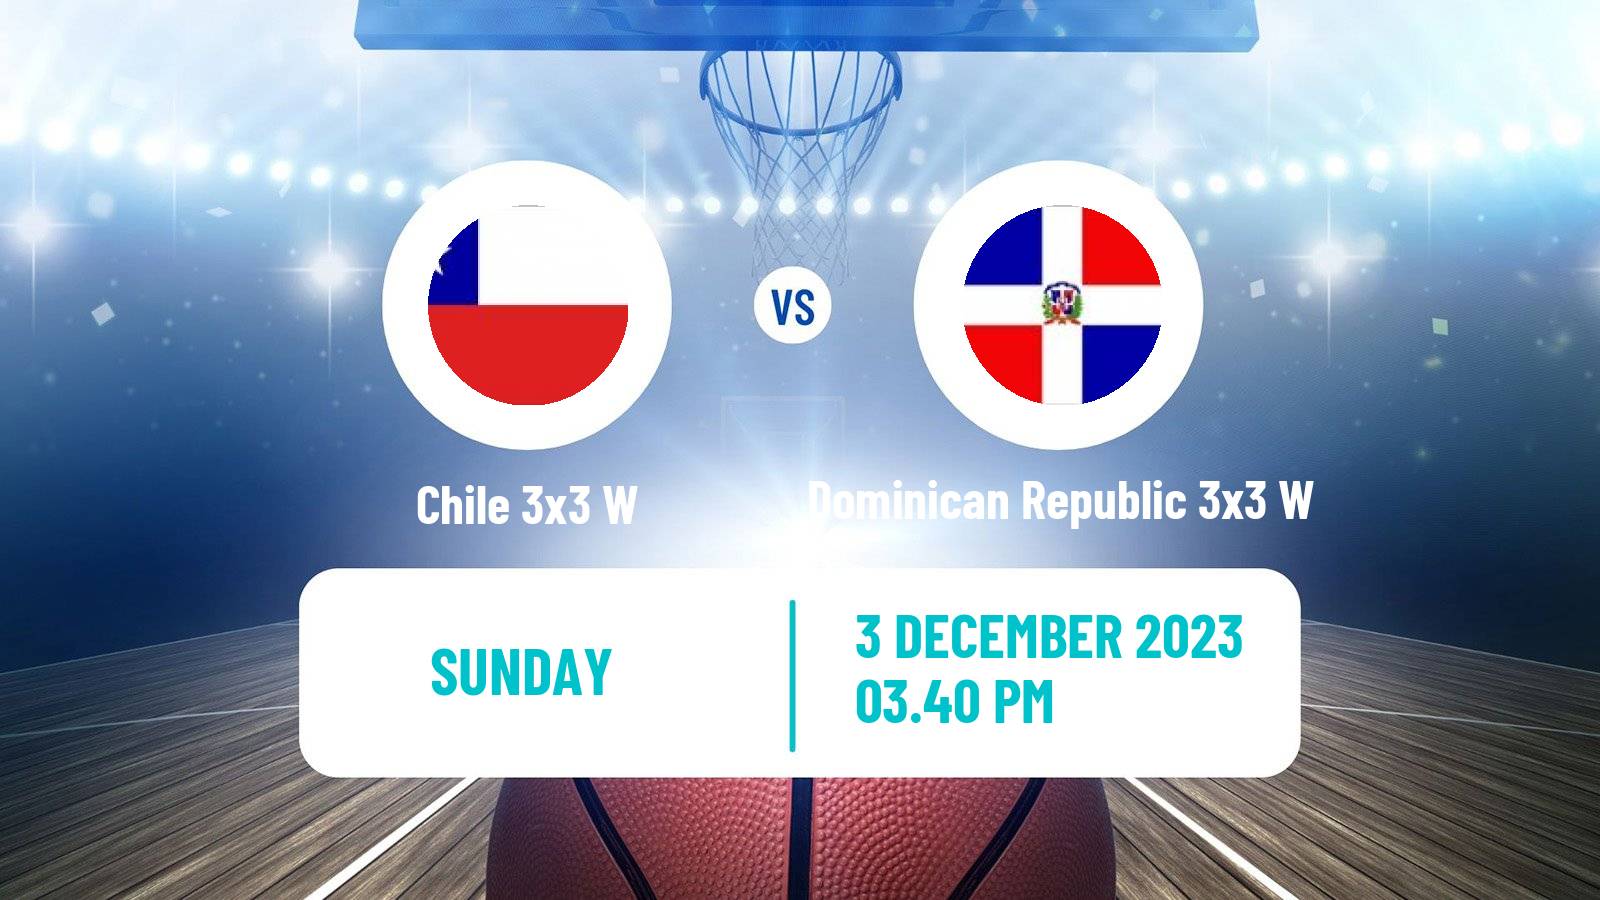 Basketball Americup 3x3 Women Chile 3x3 W - Dominican Republic 3x3 W